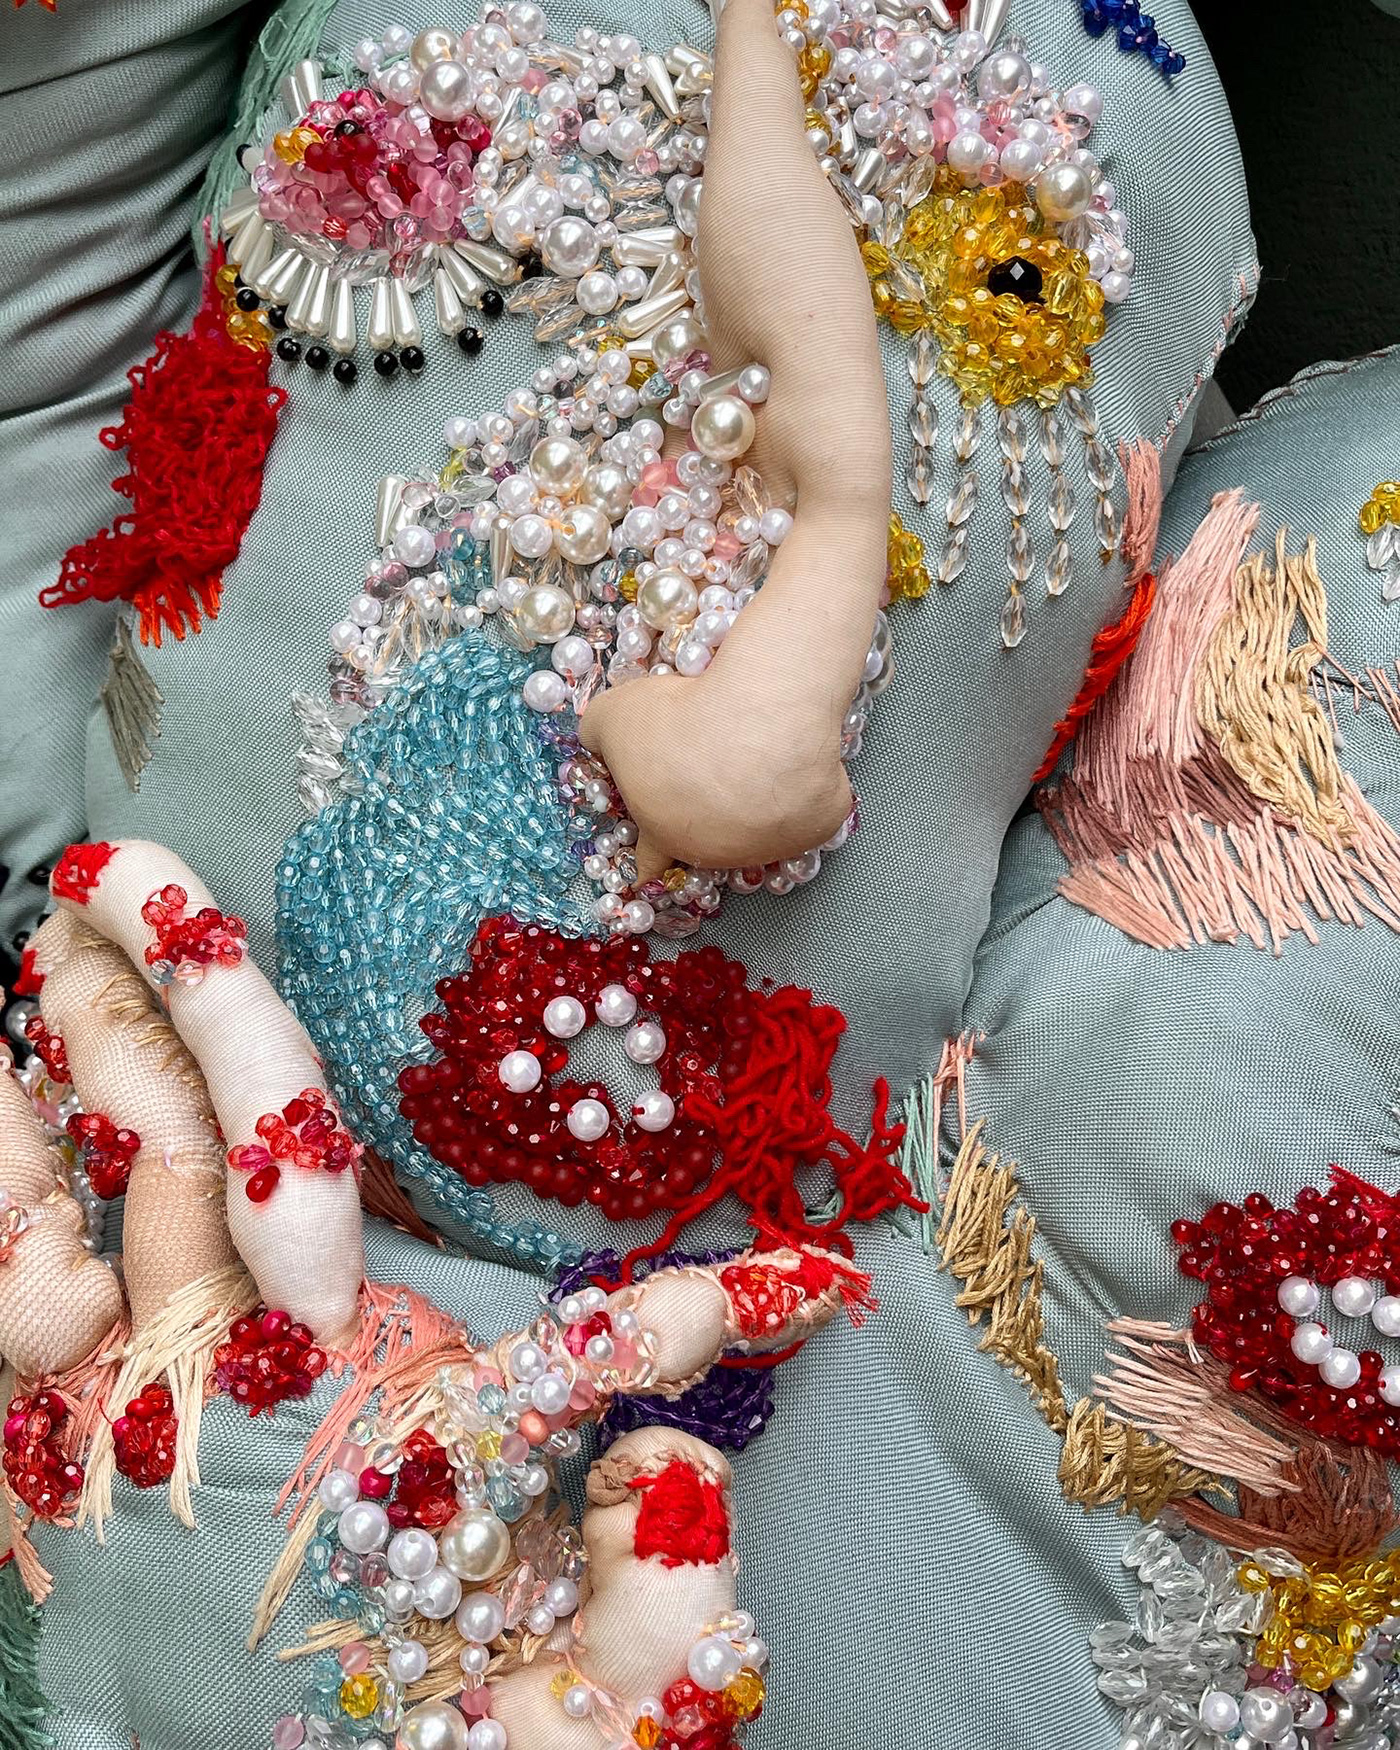 textile beads Embroidery art pride Non-Binary